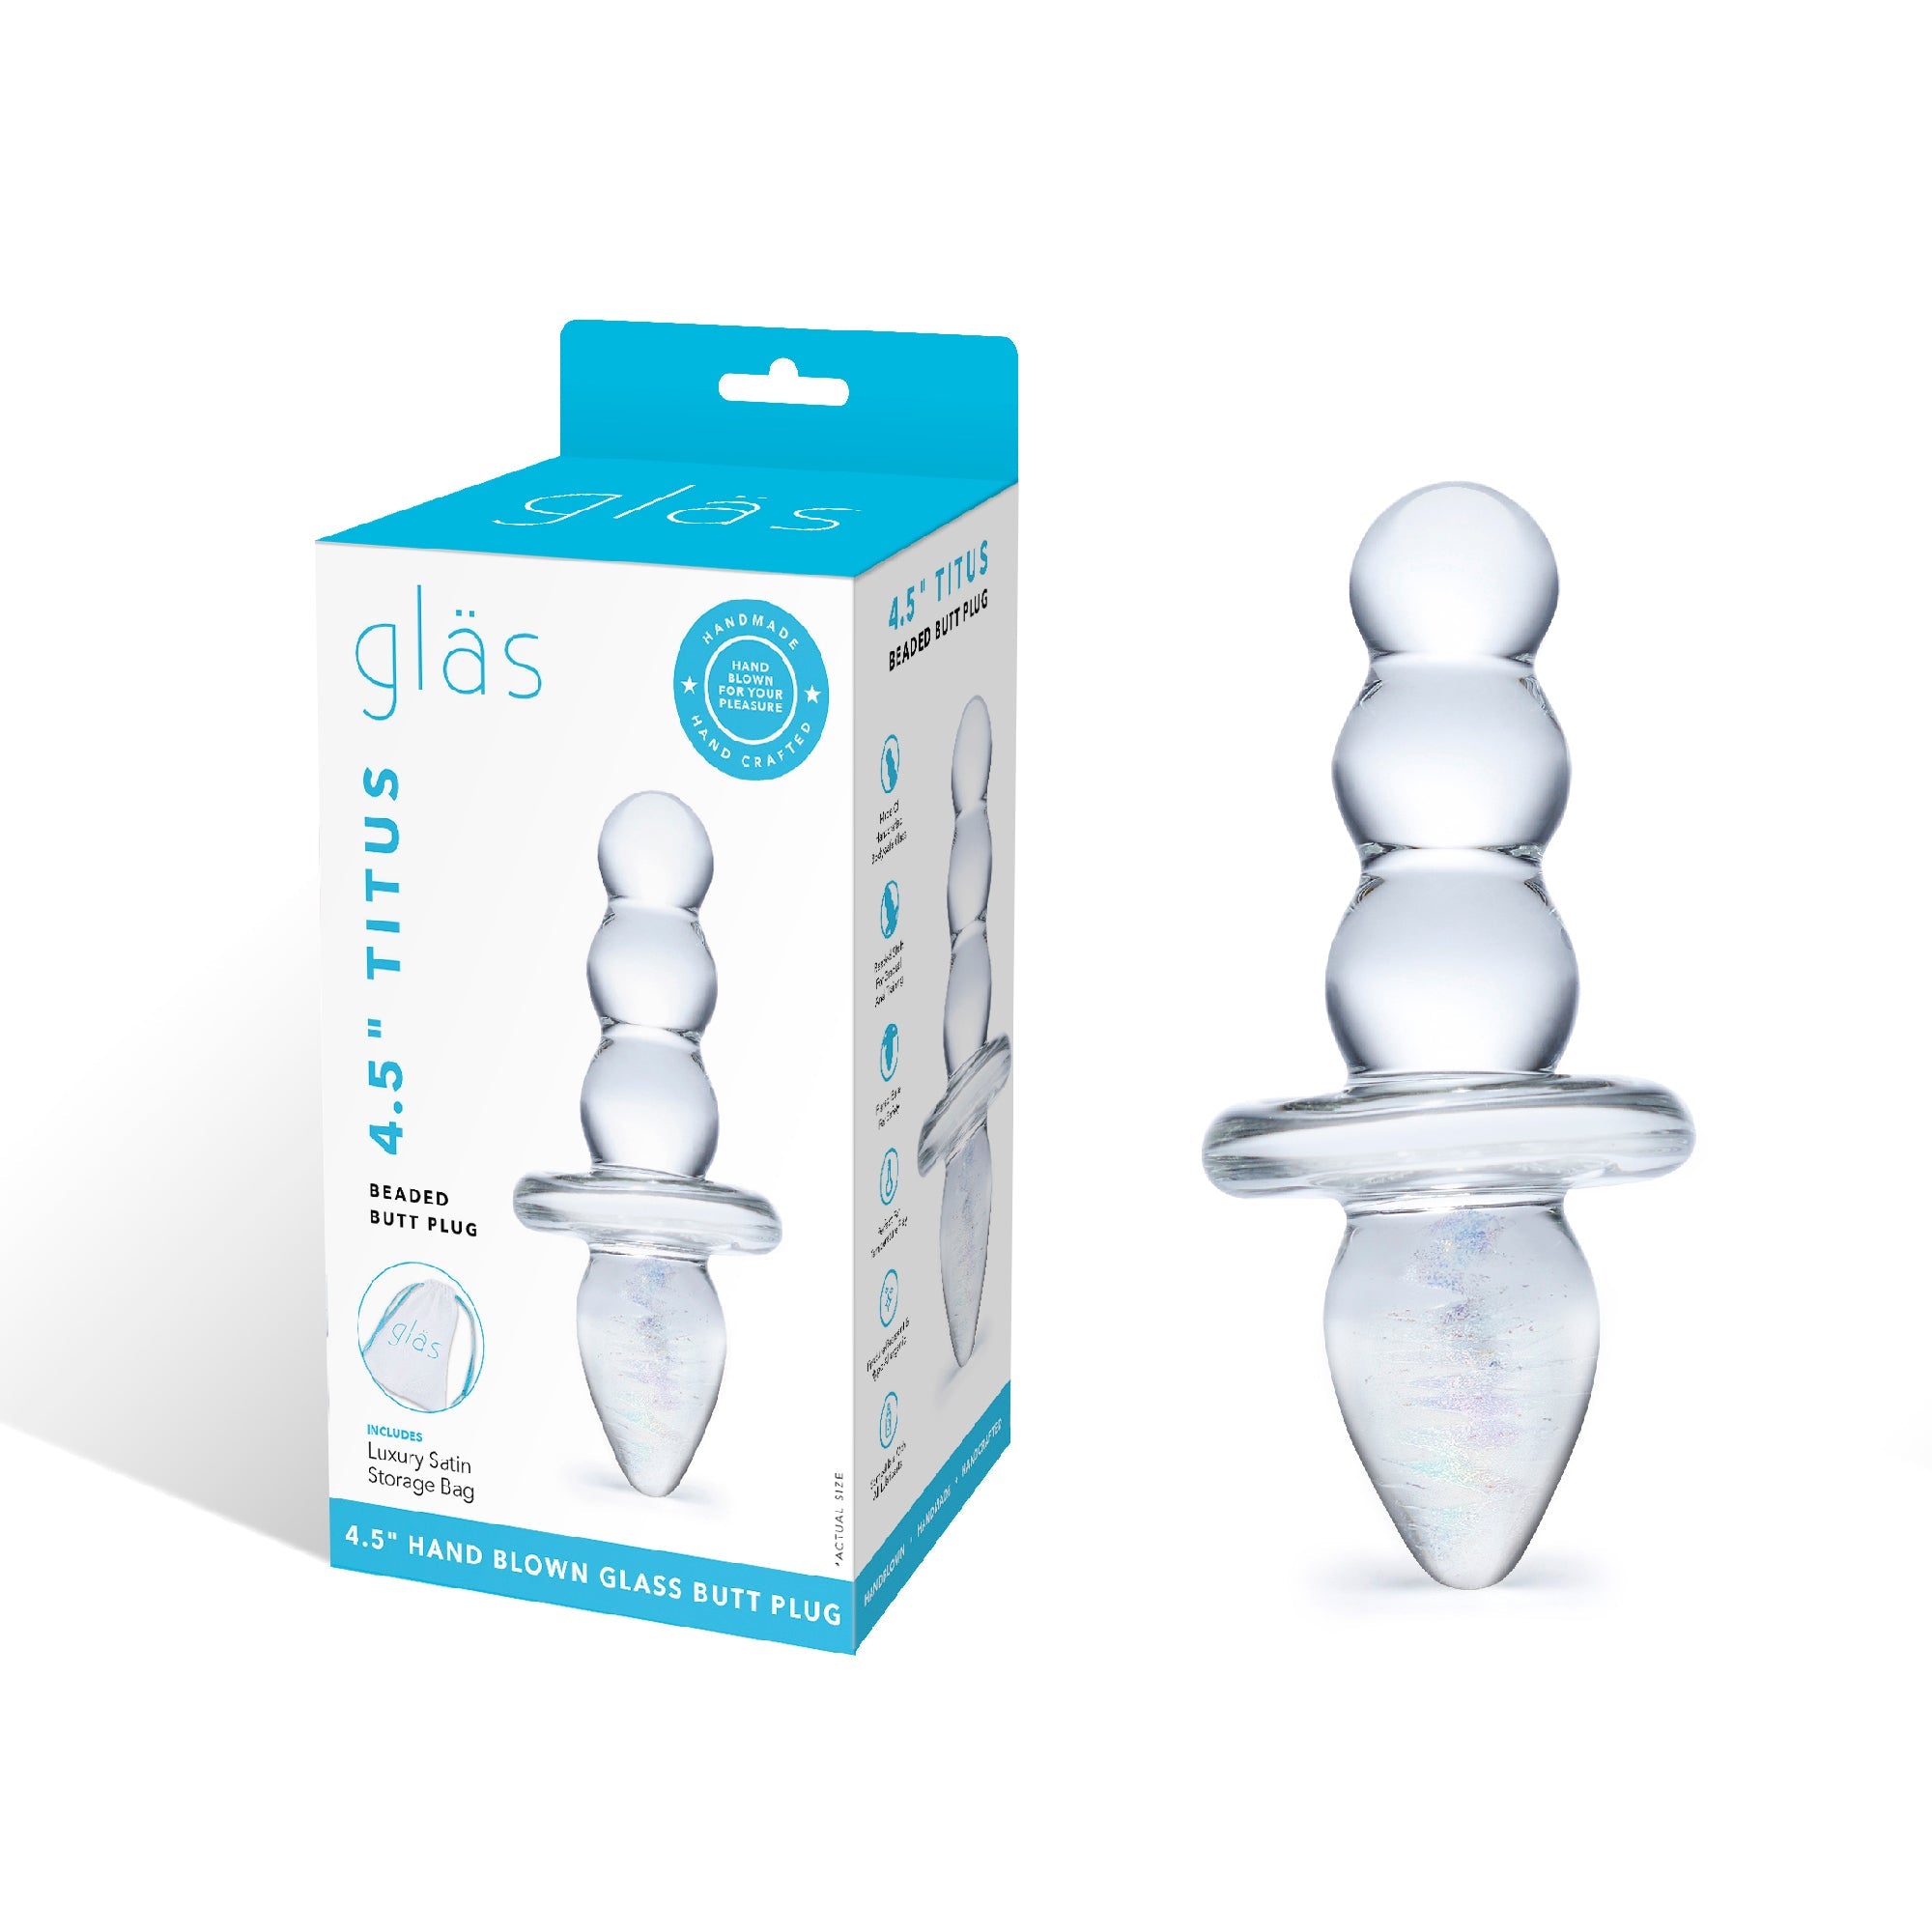 Glas - Titus Beaded Glass Butt Plug 4.5"